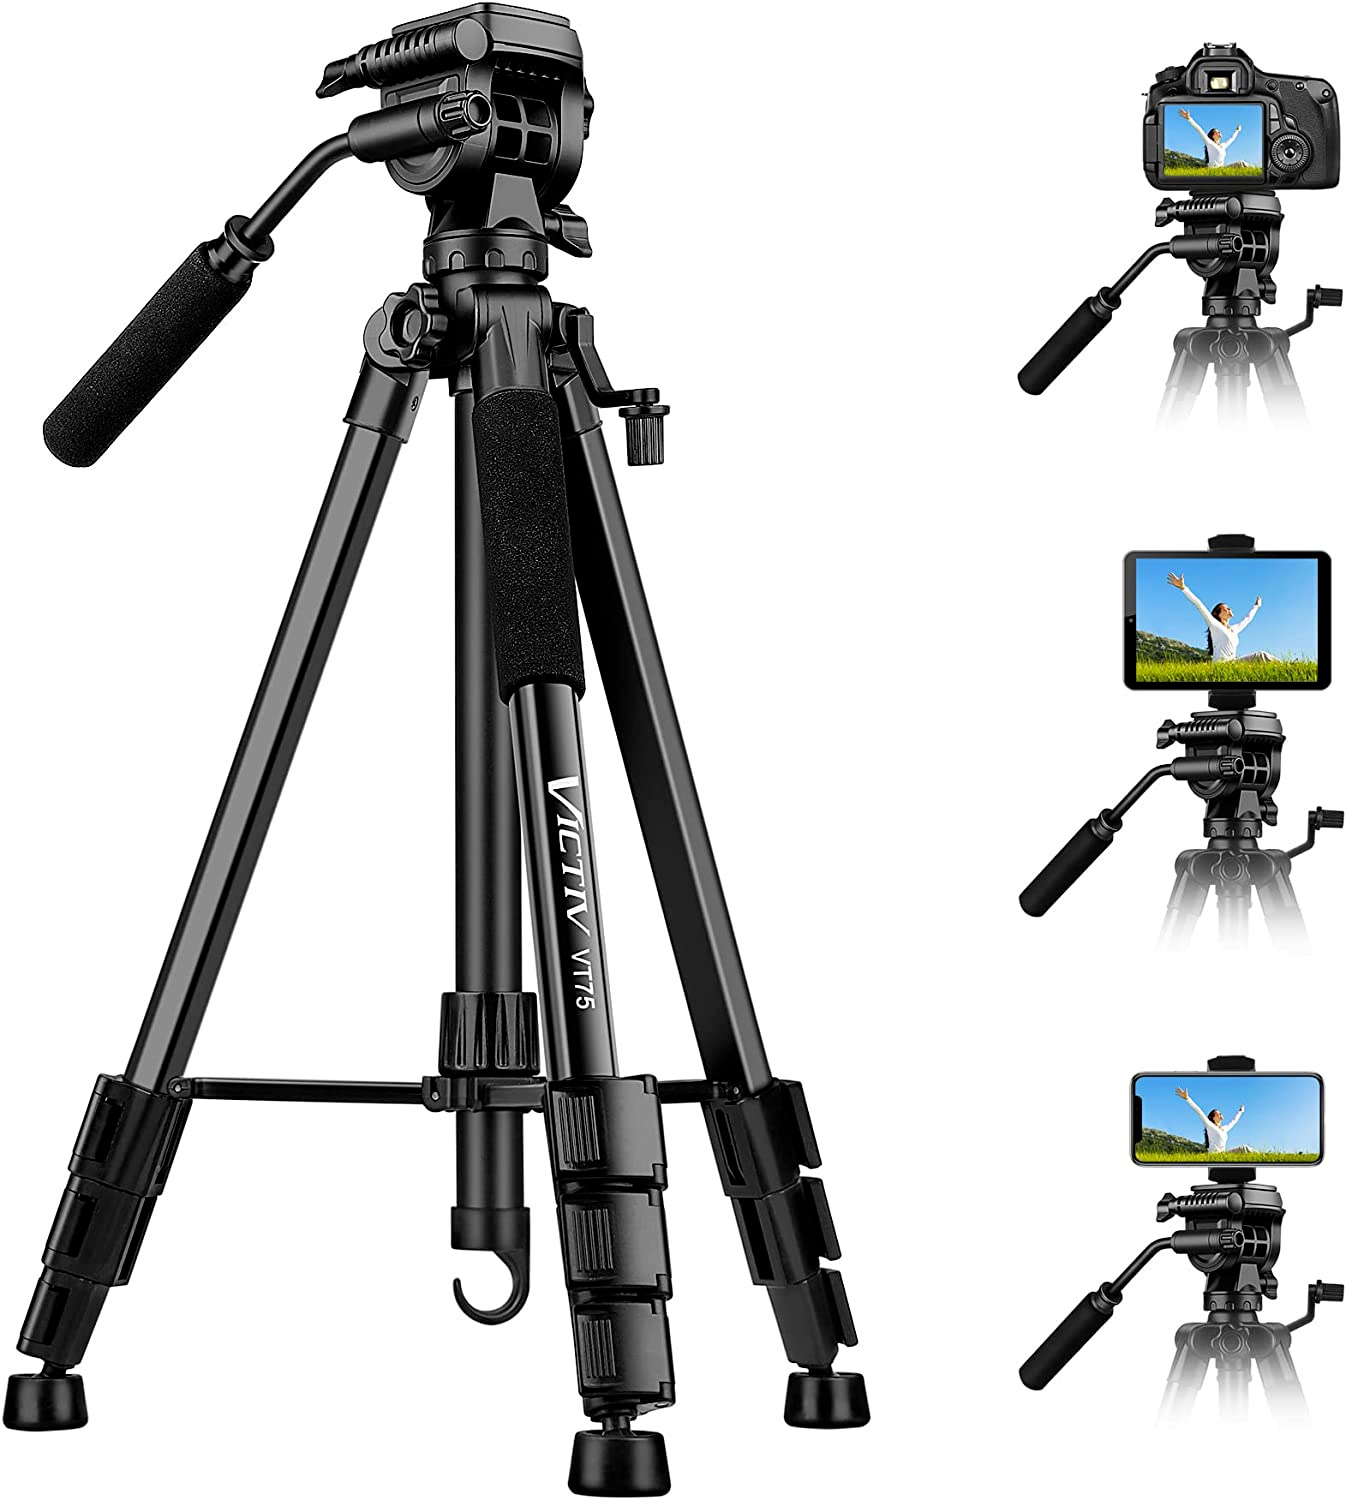 73 inch Tripod for Camera with Fluid Head, Tall Camera Stand Tripod Heavy Duty w